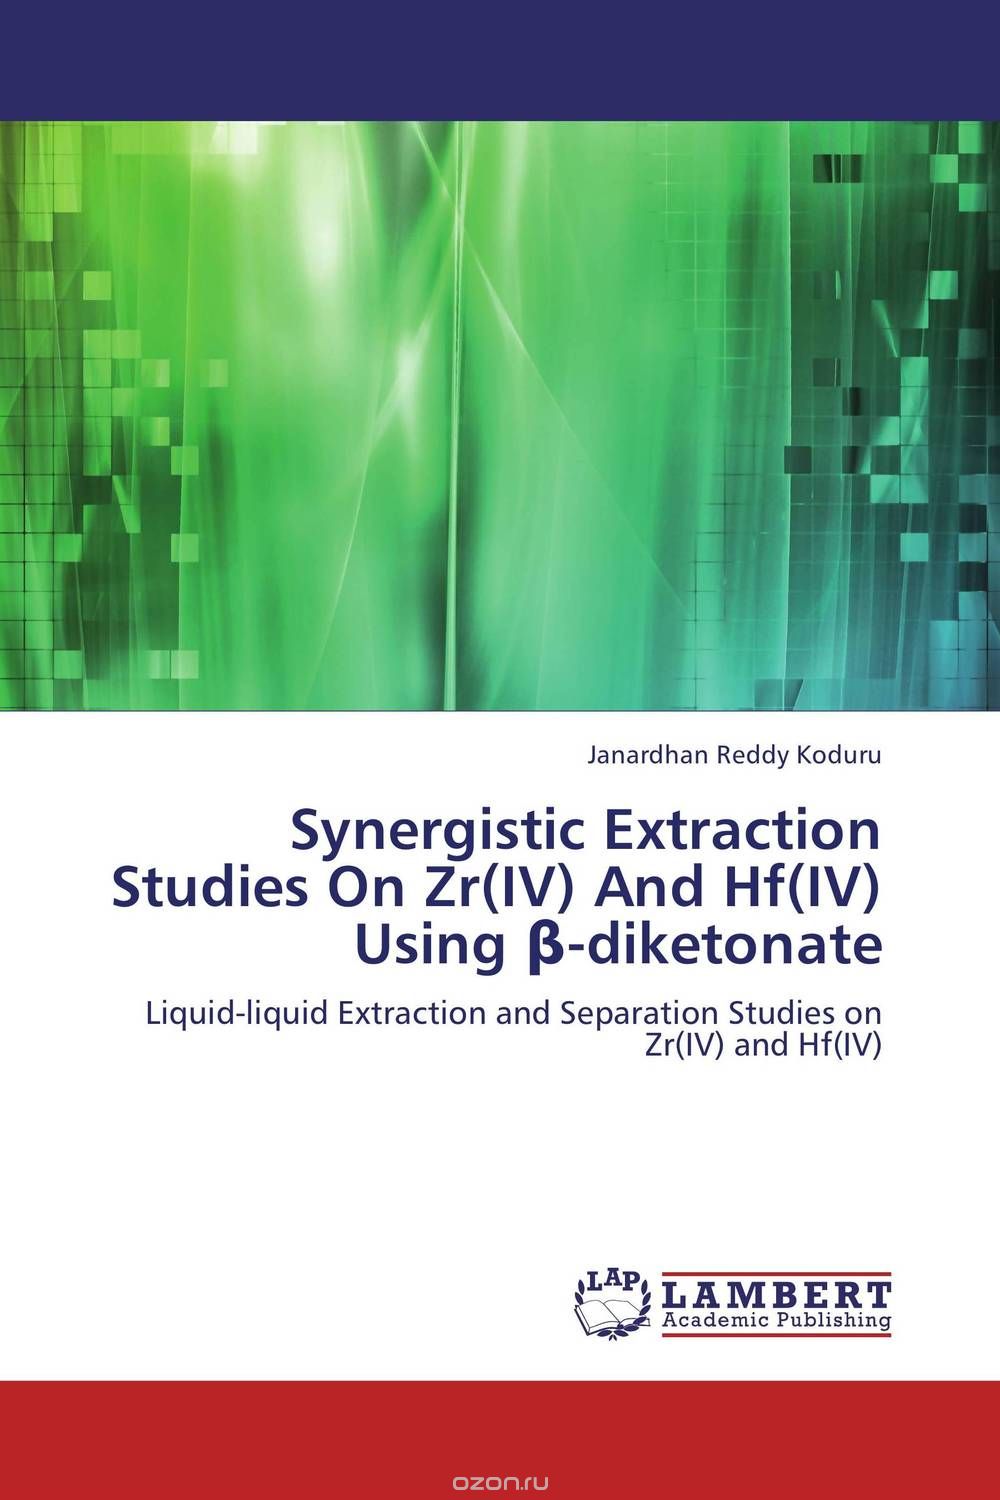 Скачать книгу "Synergistic Extraction Studies On Zr(IV) And Hf(IV) Using ?-diketonate"